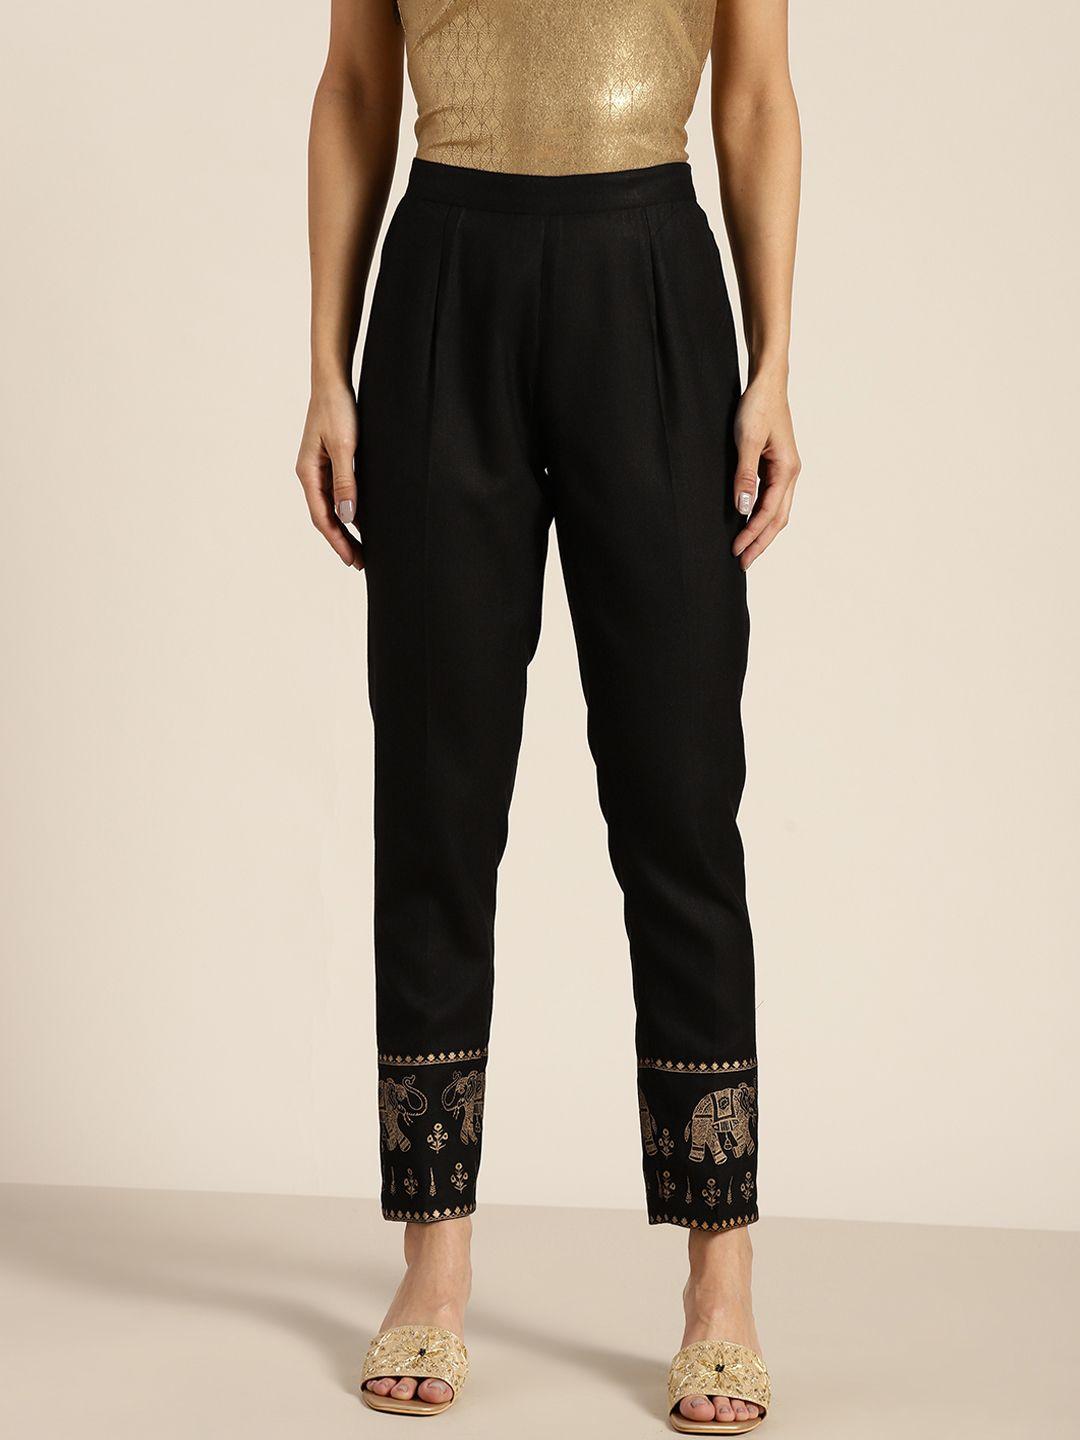 shae-by-sassafras-women-stunning-black-ethnic-motifs-pleated-form-trousers